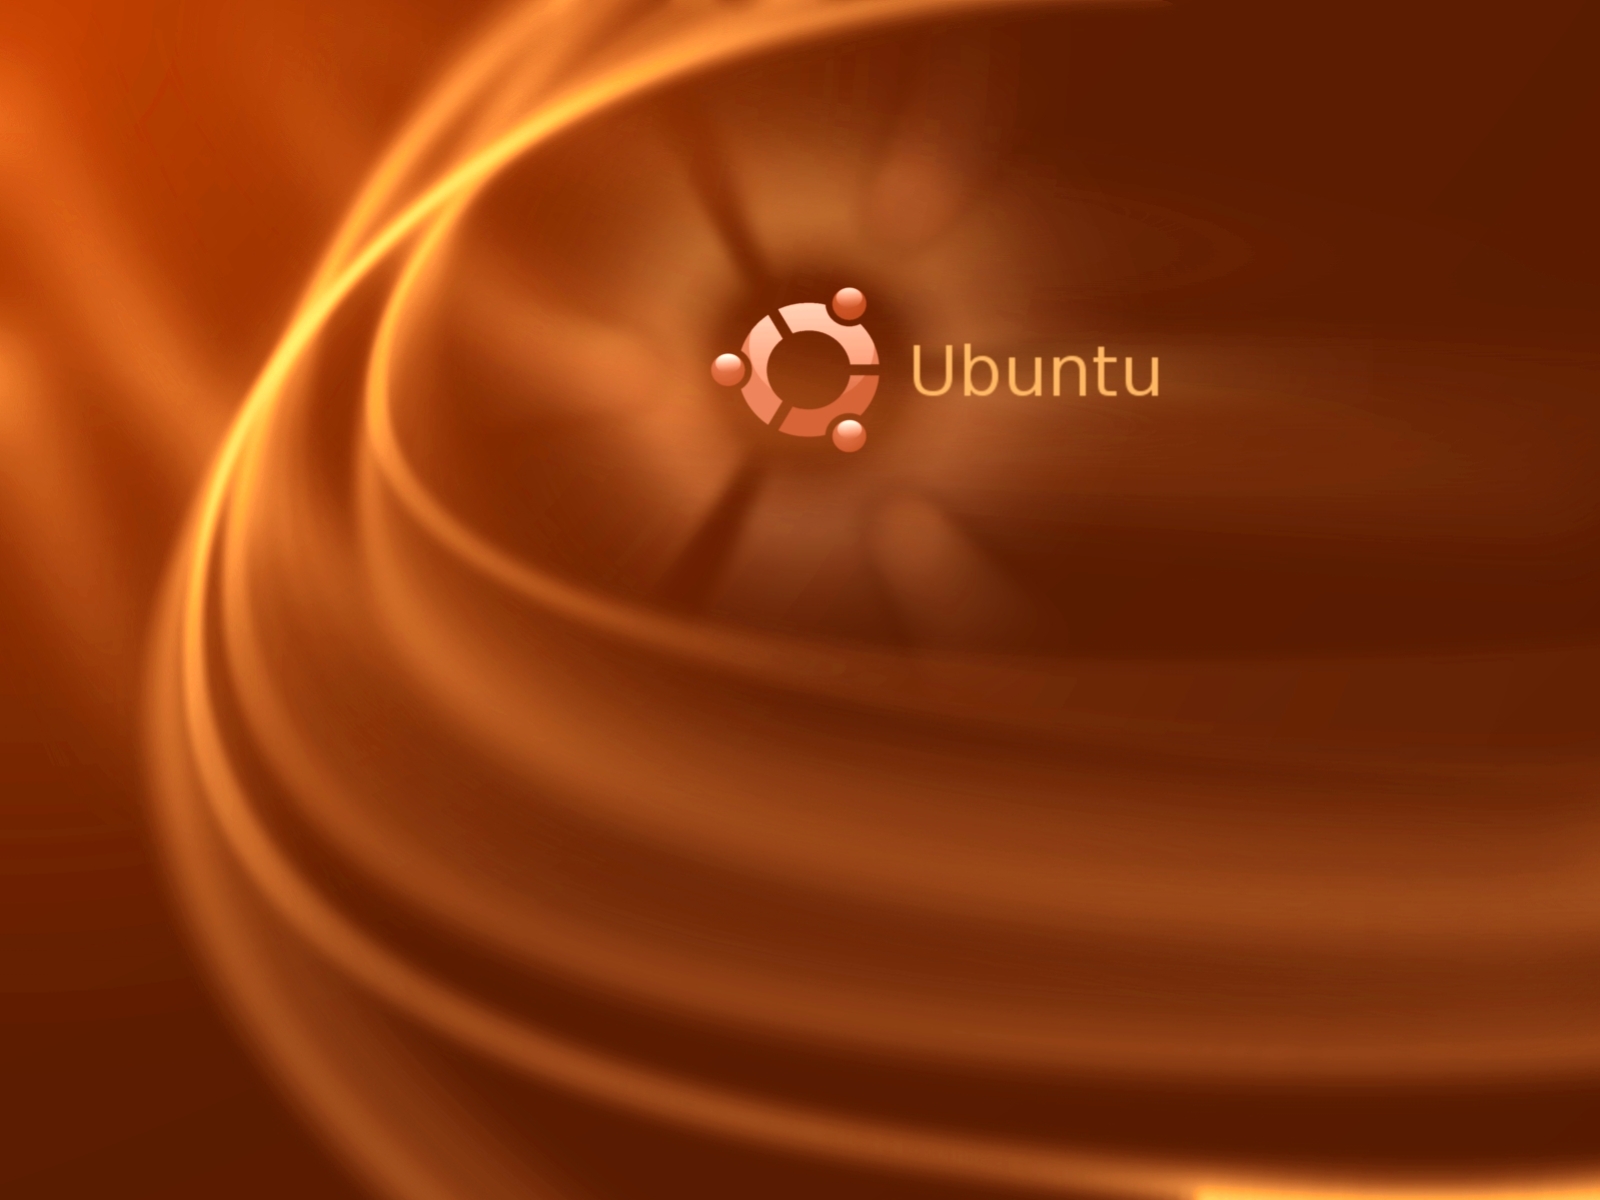 ubuntu 3d logos wallpapers hd ubuntu 3d logos wallpapers hd